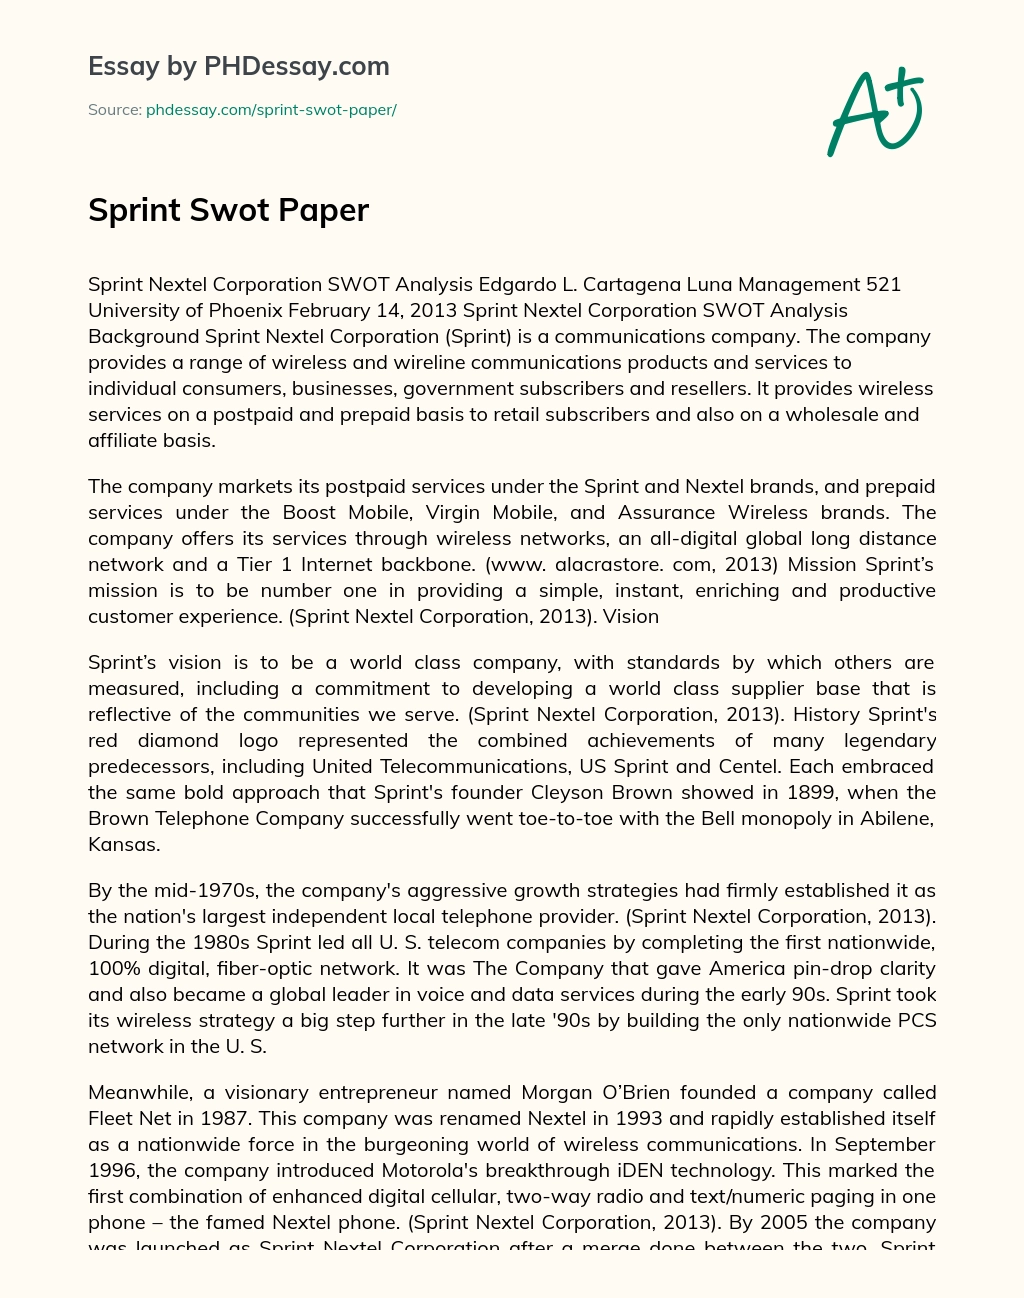 Sprint Swot Paper essay